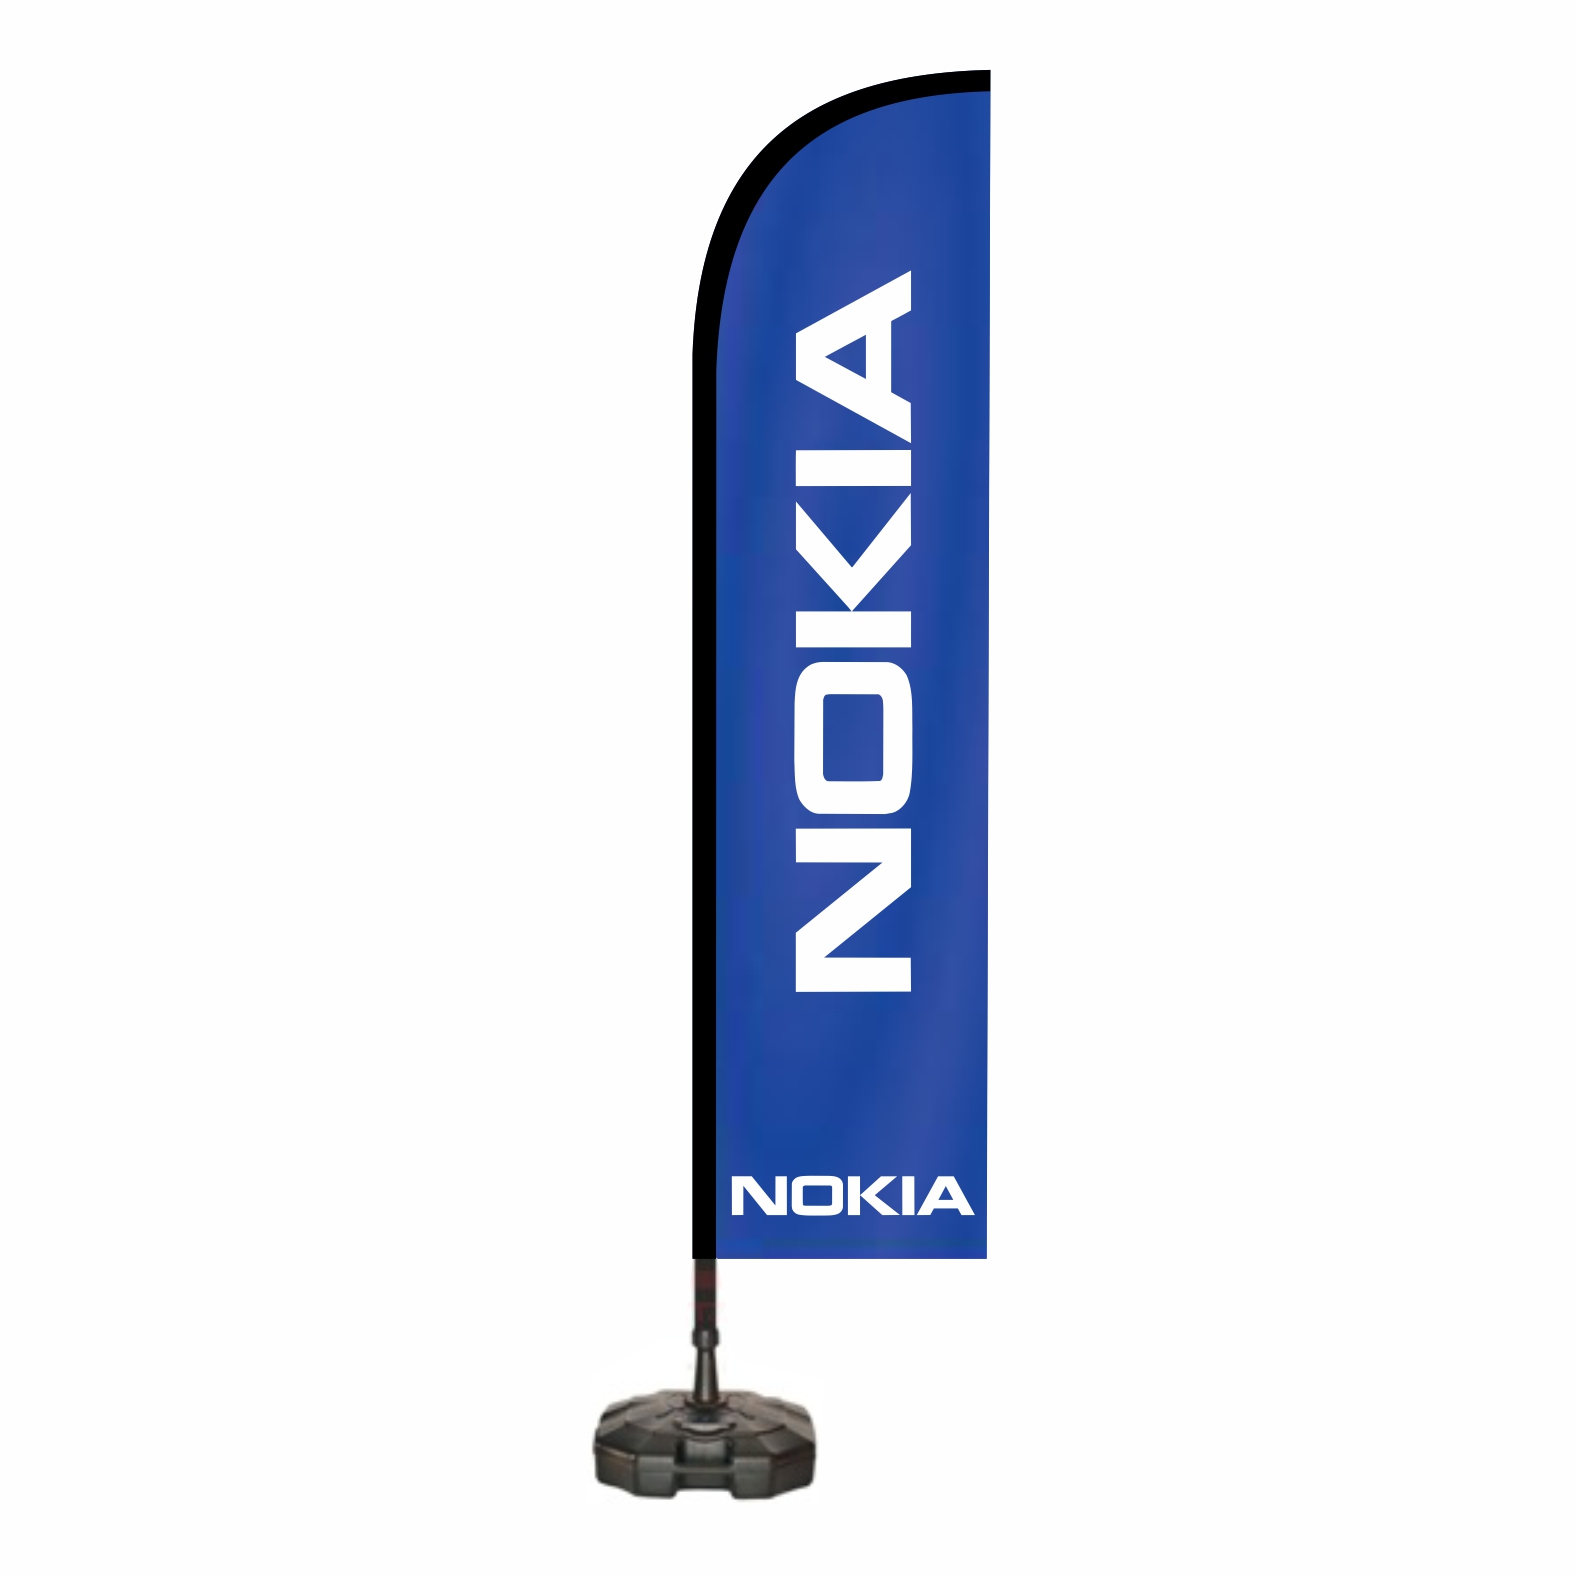 Nokia Dkkan n Bayra Ne Demek